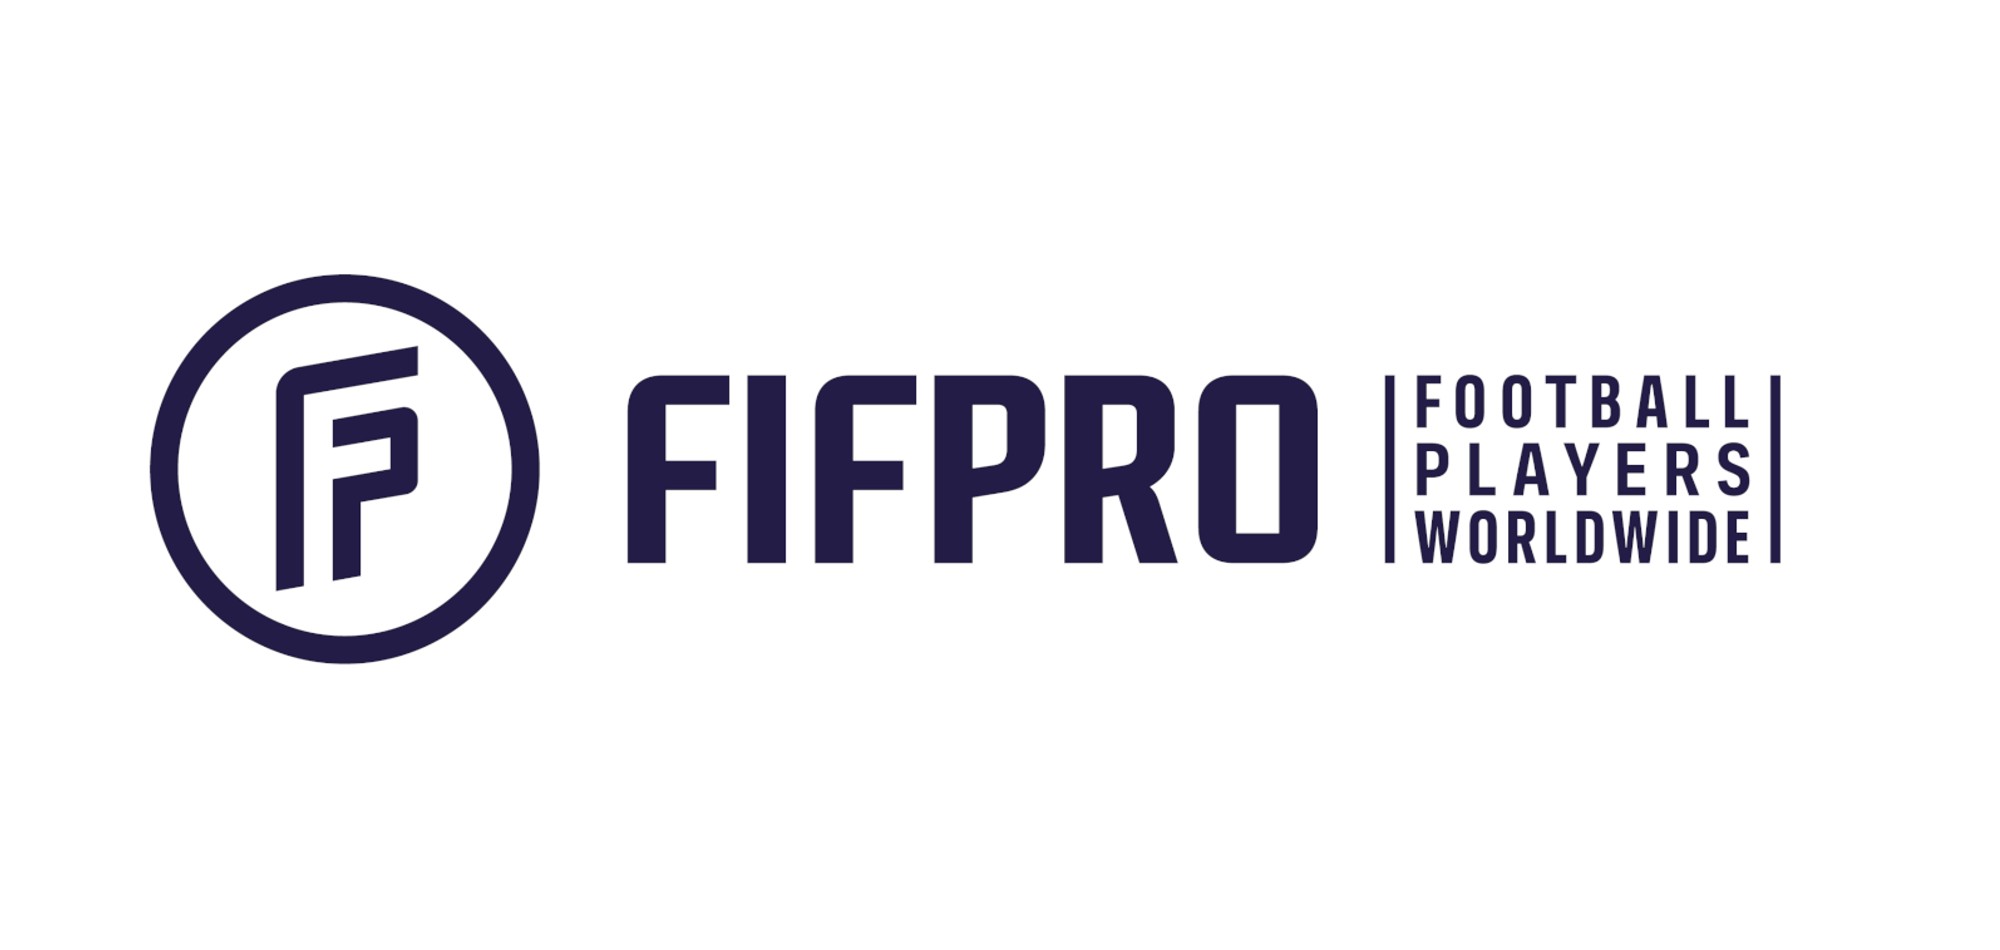 Al Ansari elected to FIFPro Board of Directors